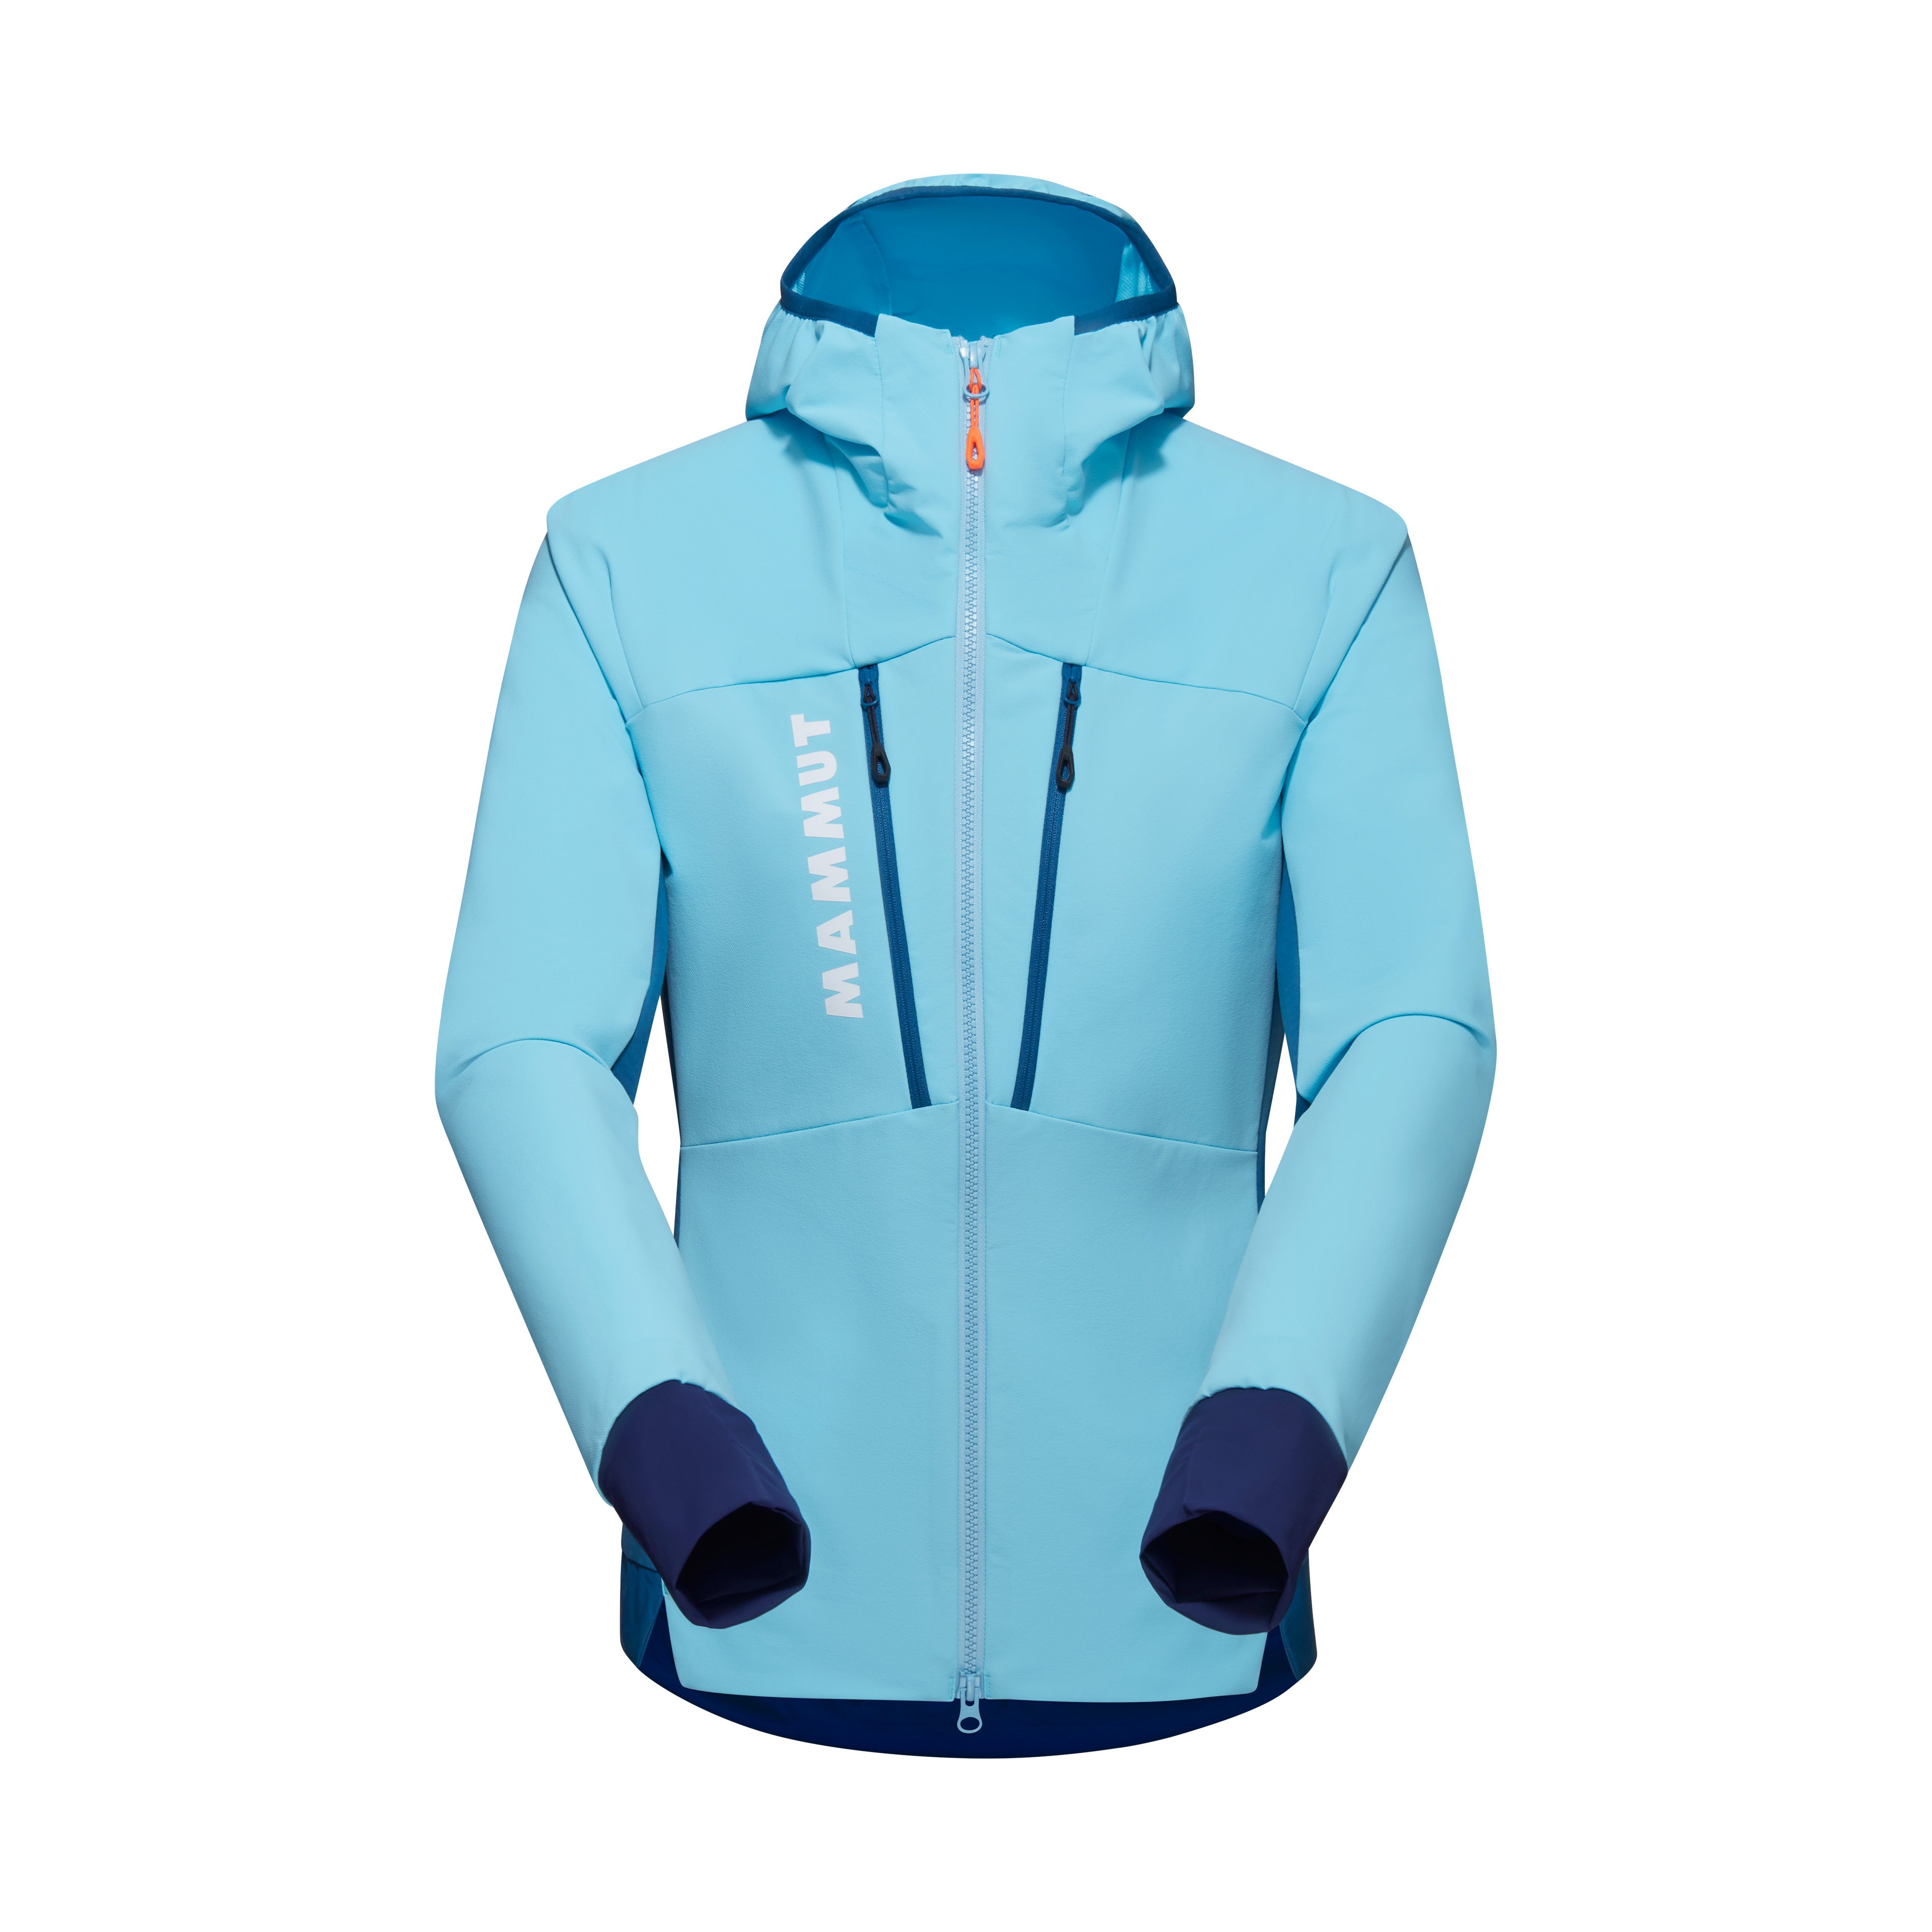 Aenergy SO Hybrid Hooded Jacket Women - cool blue-deep ice, XL thumbnail